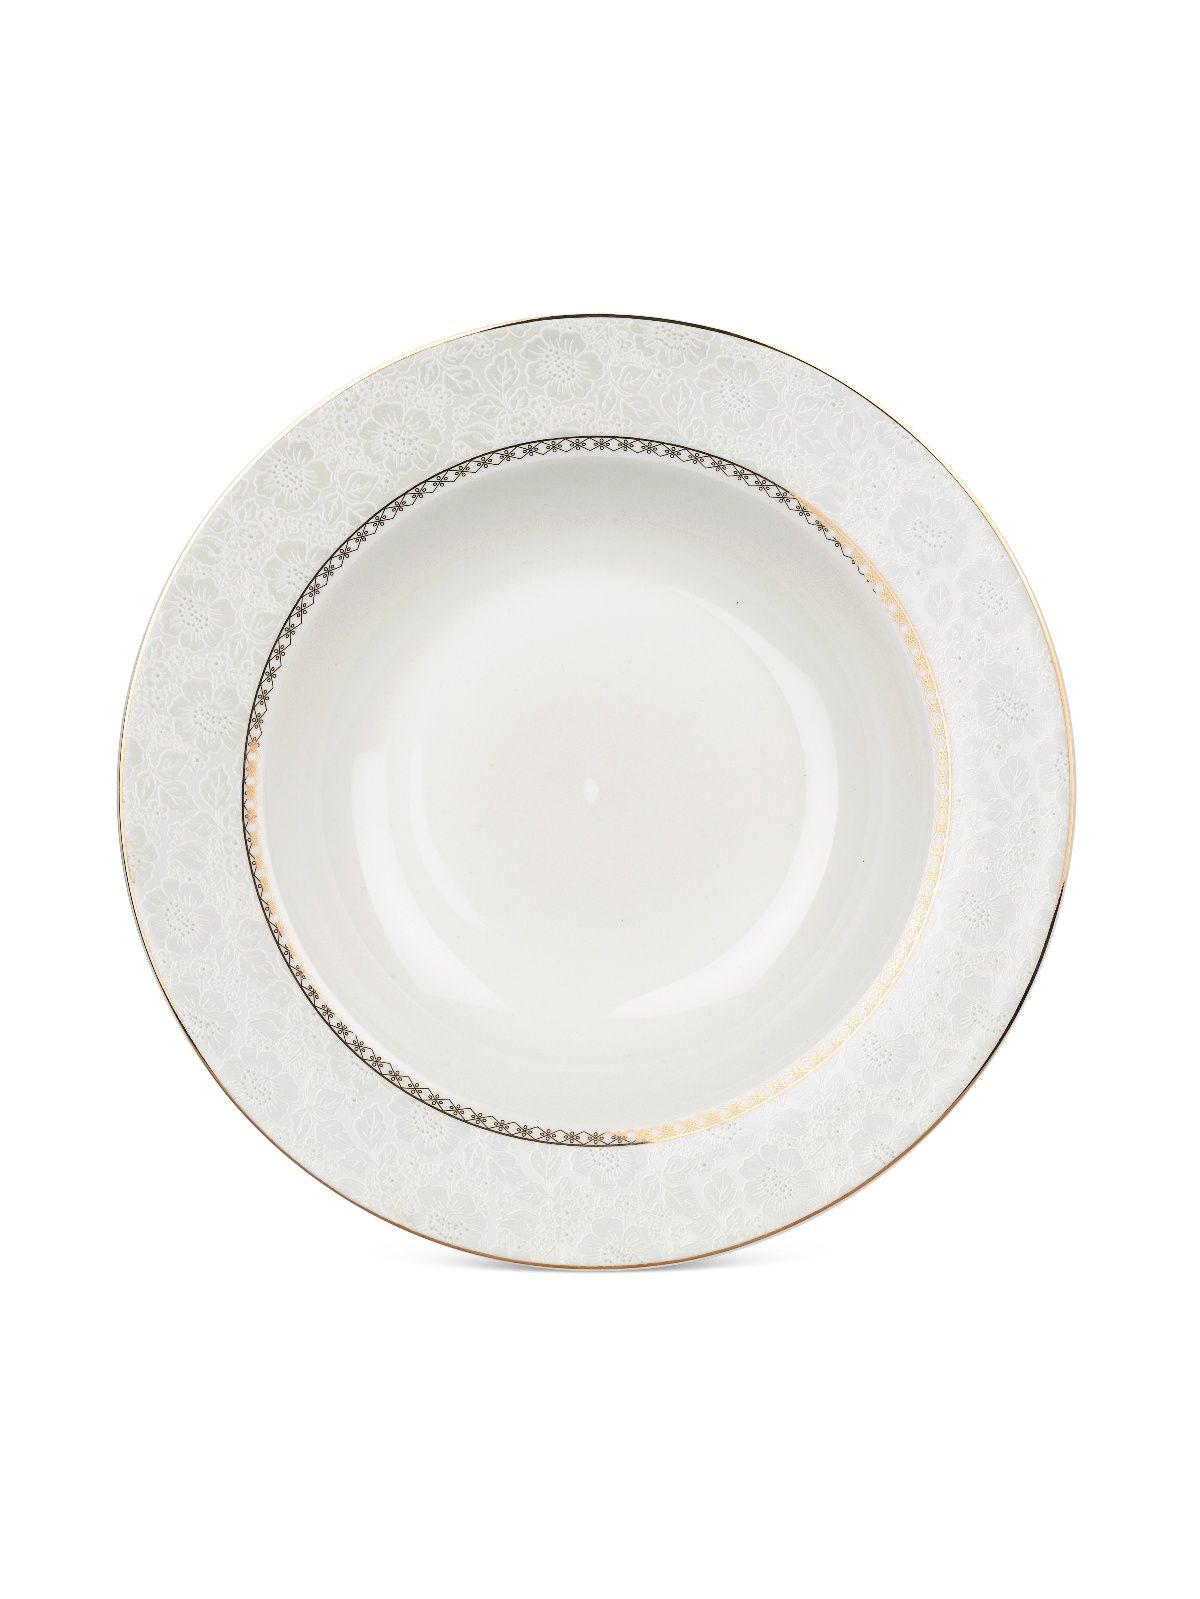 Тарелка суповая ELEGANCE 21.5см FIORETTA TDP612 тарелка суповая fioretta dynasty tdp082 23см